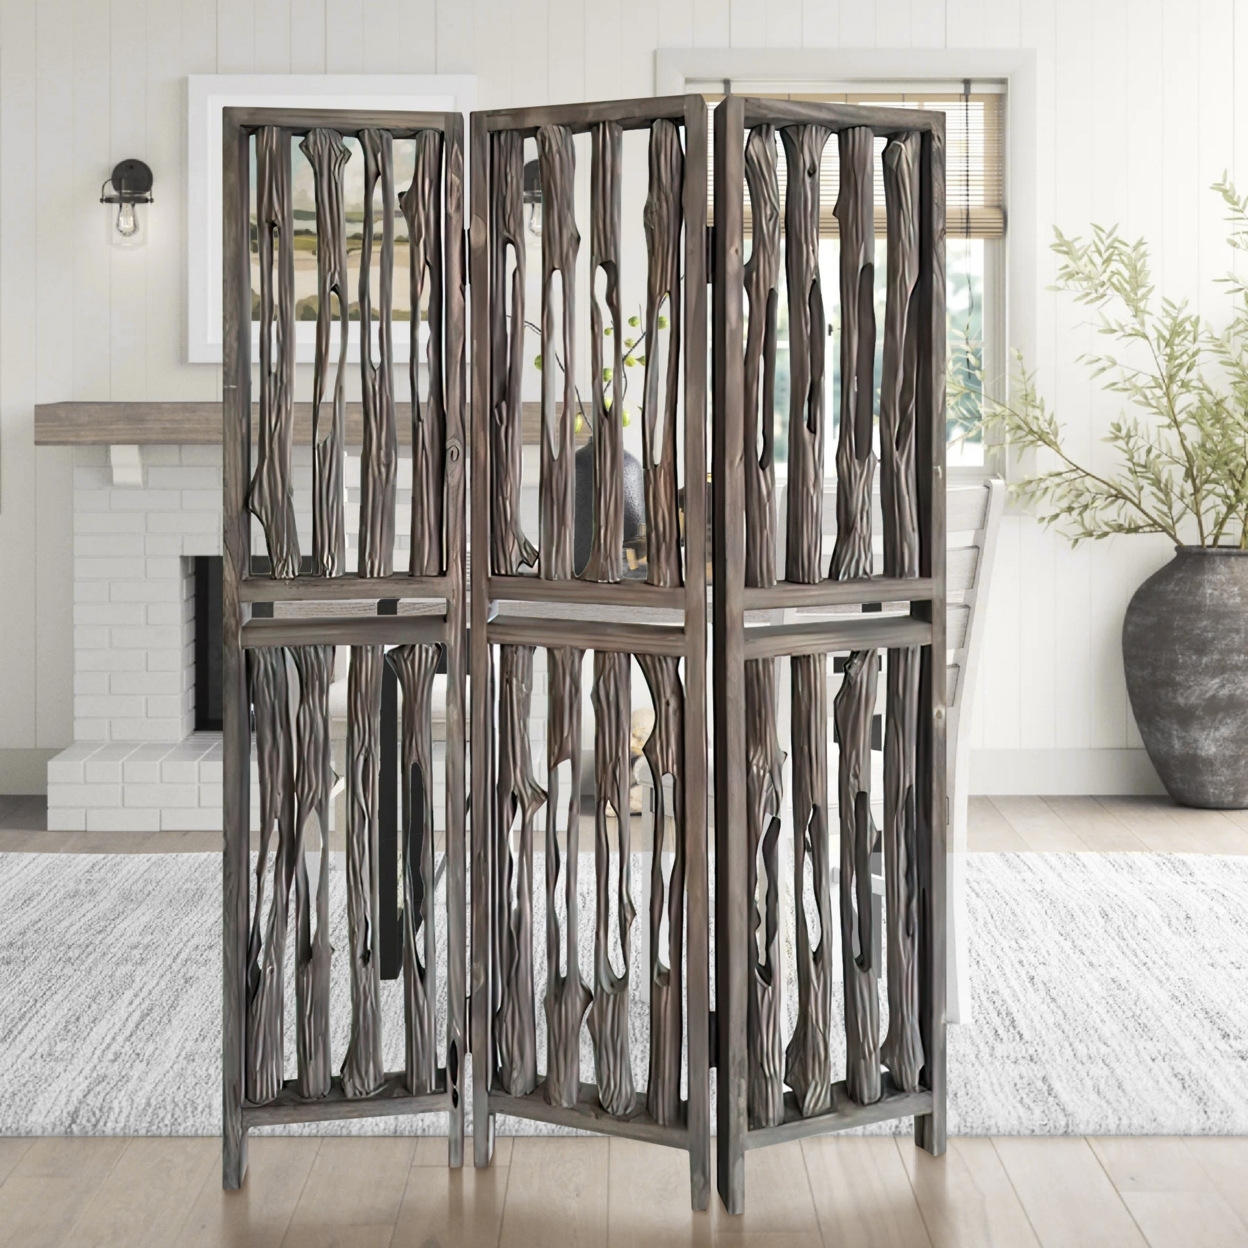 Contemporary 3 Panel Wooden Screen With Log Design, Brown- Saltoro Sherpi